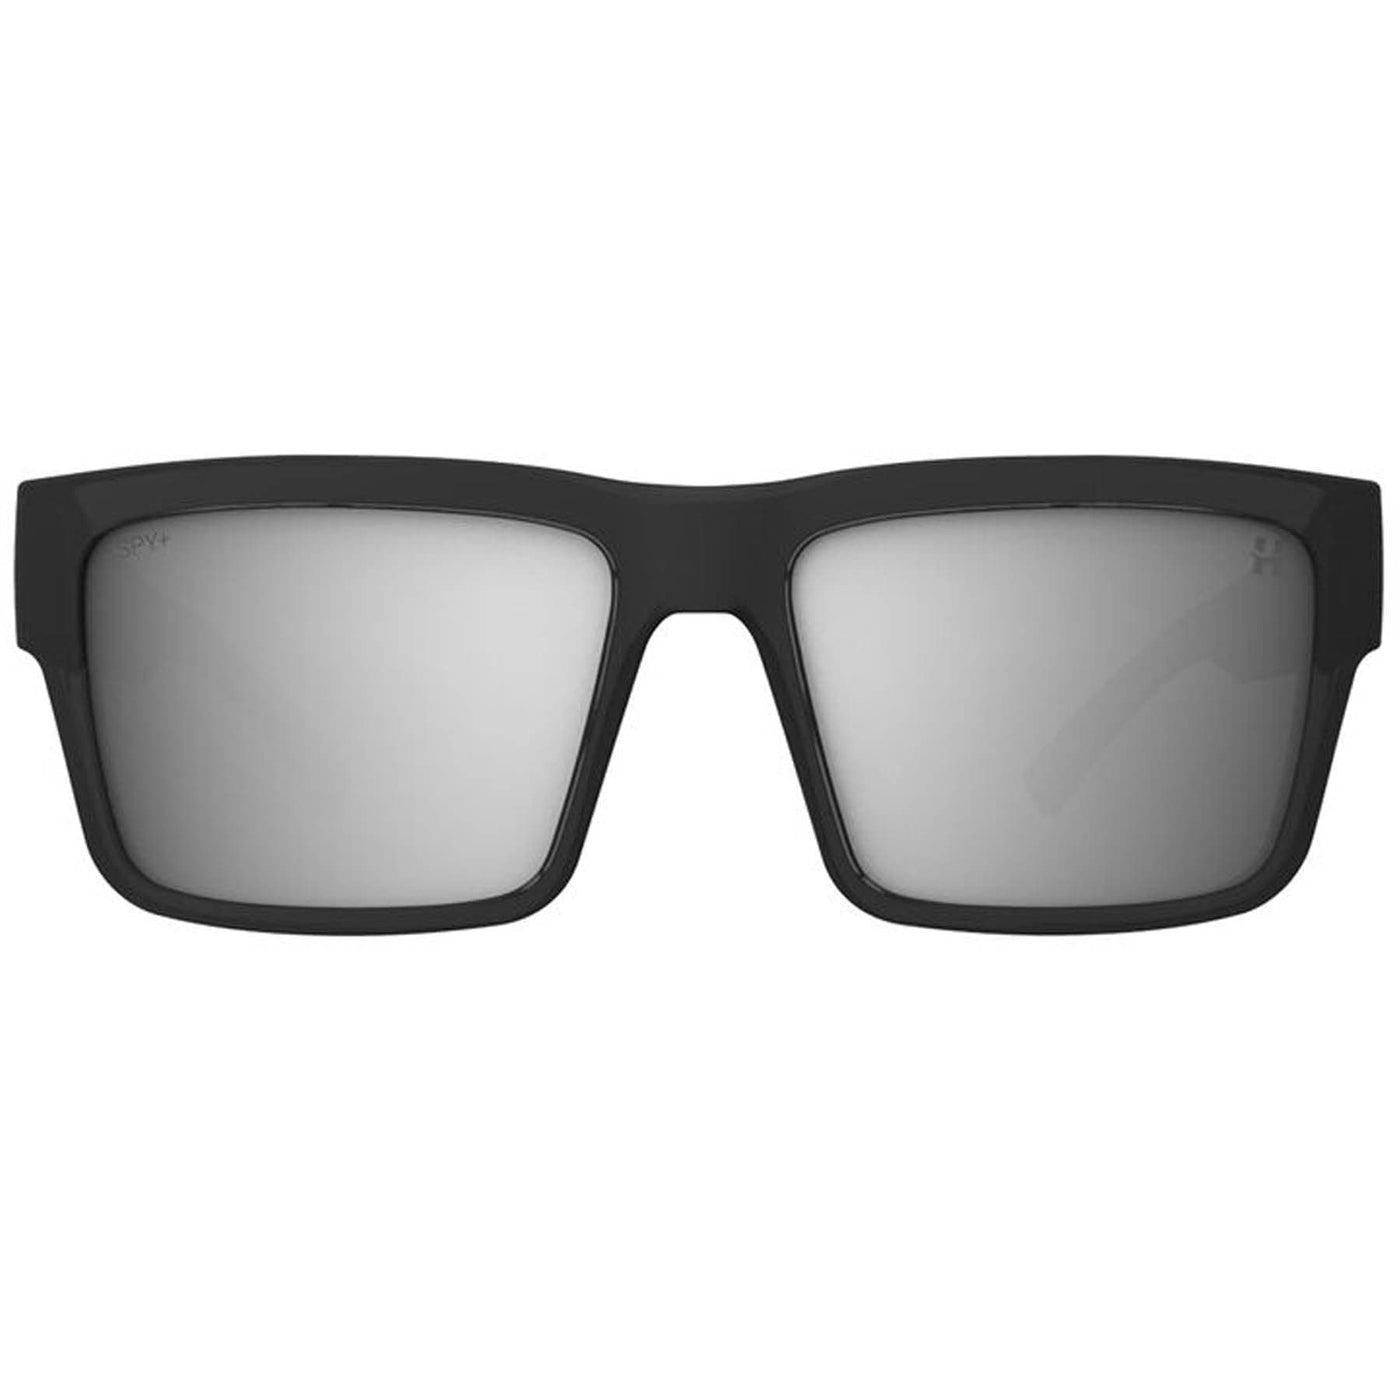 SPY MONTANA Sunglasses, Happy Lens - Platinum 8Lines Shop - Fast Shipping